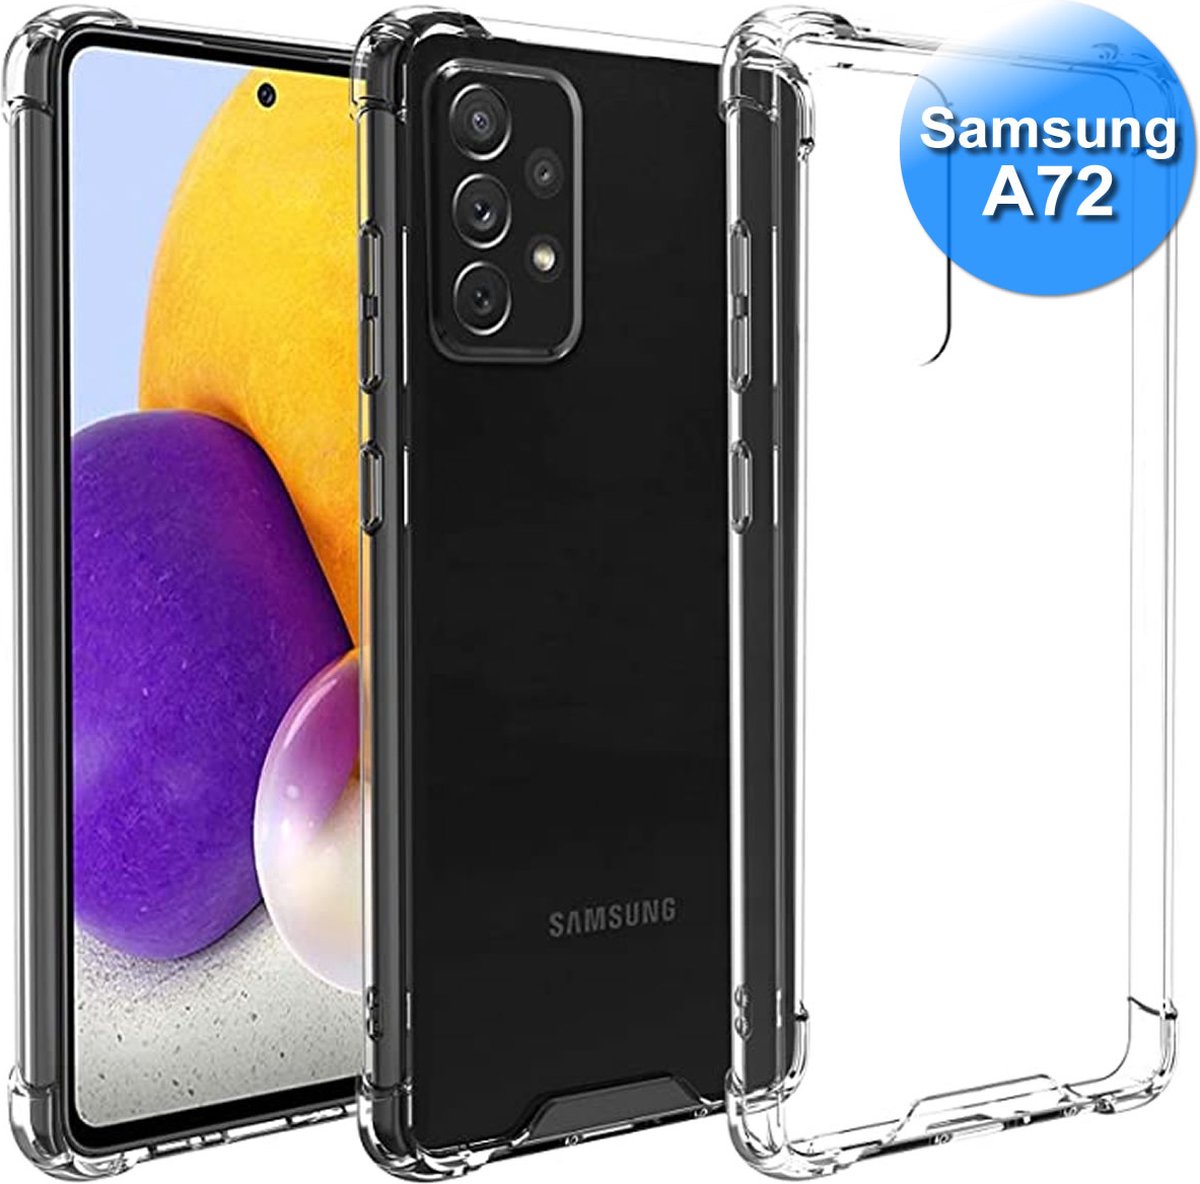 Telefoonhoesje geschikt voor de Samsung A72 - Anti Shock hoesje - Hard Back Cover - Transparant